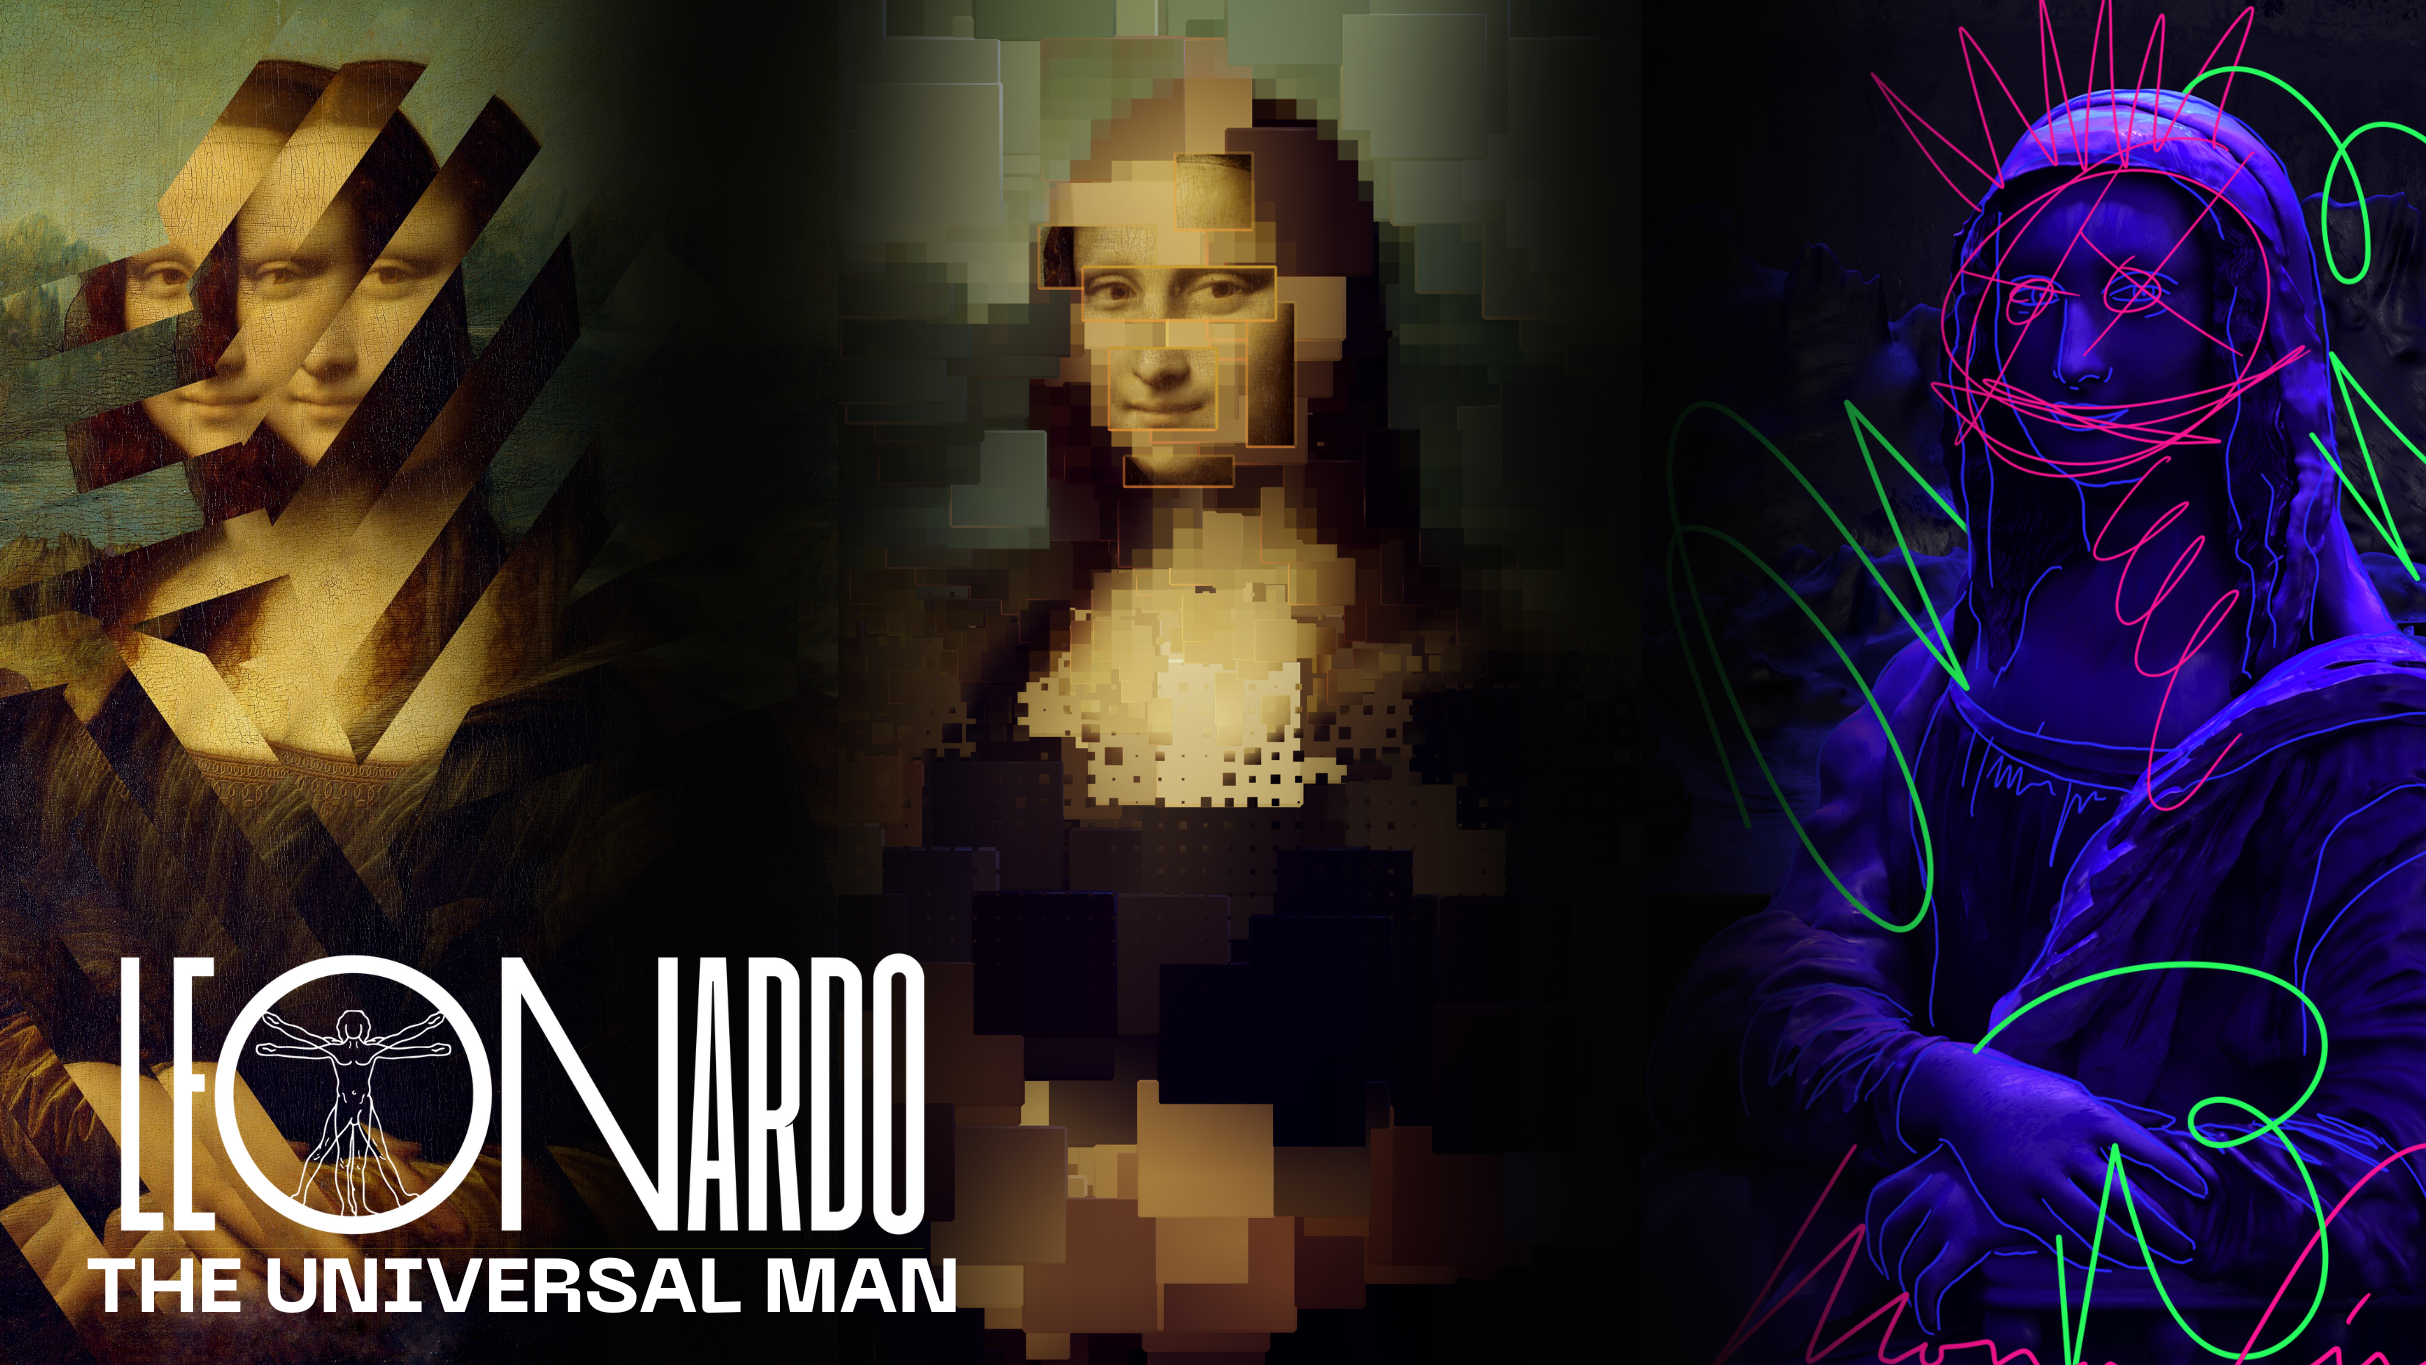 Main image for event titled Leonardo: The Universal Man